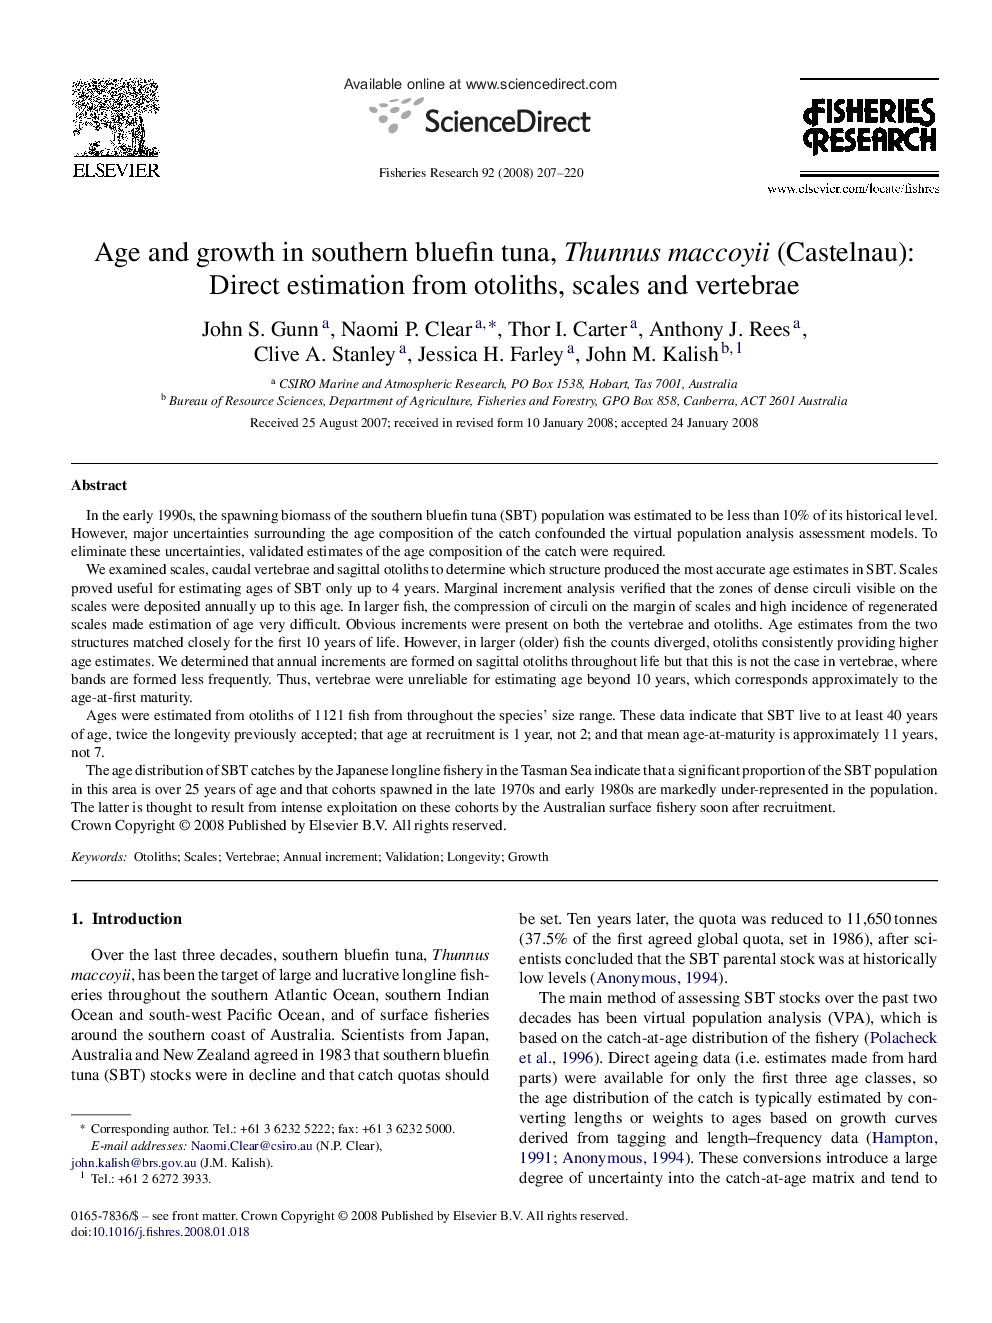 Age and growth in southern bluefin tuna, Thunnus maccoyii (Castelnau): Direct estimation from otoliths, scales and vertebrae